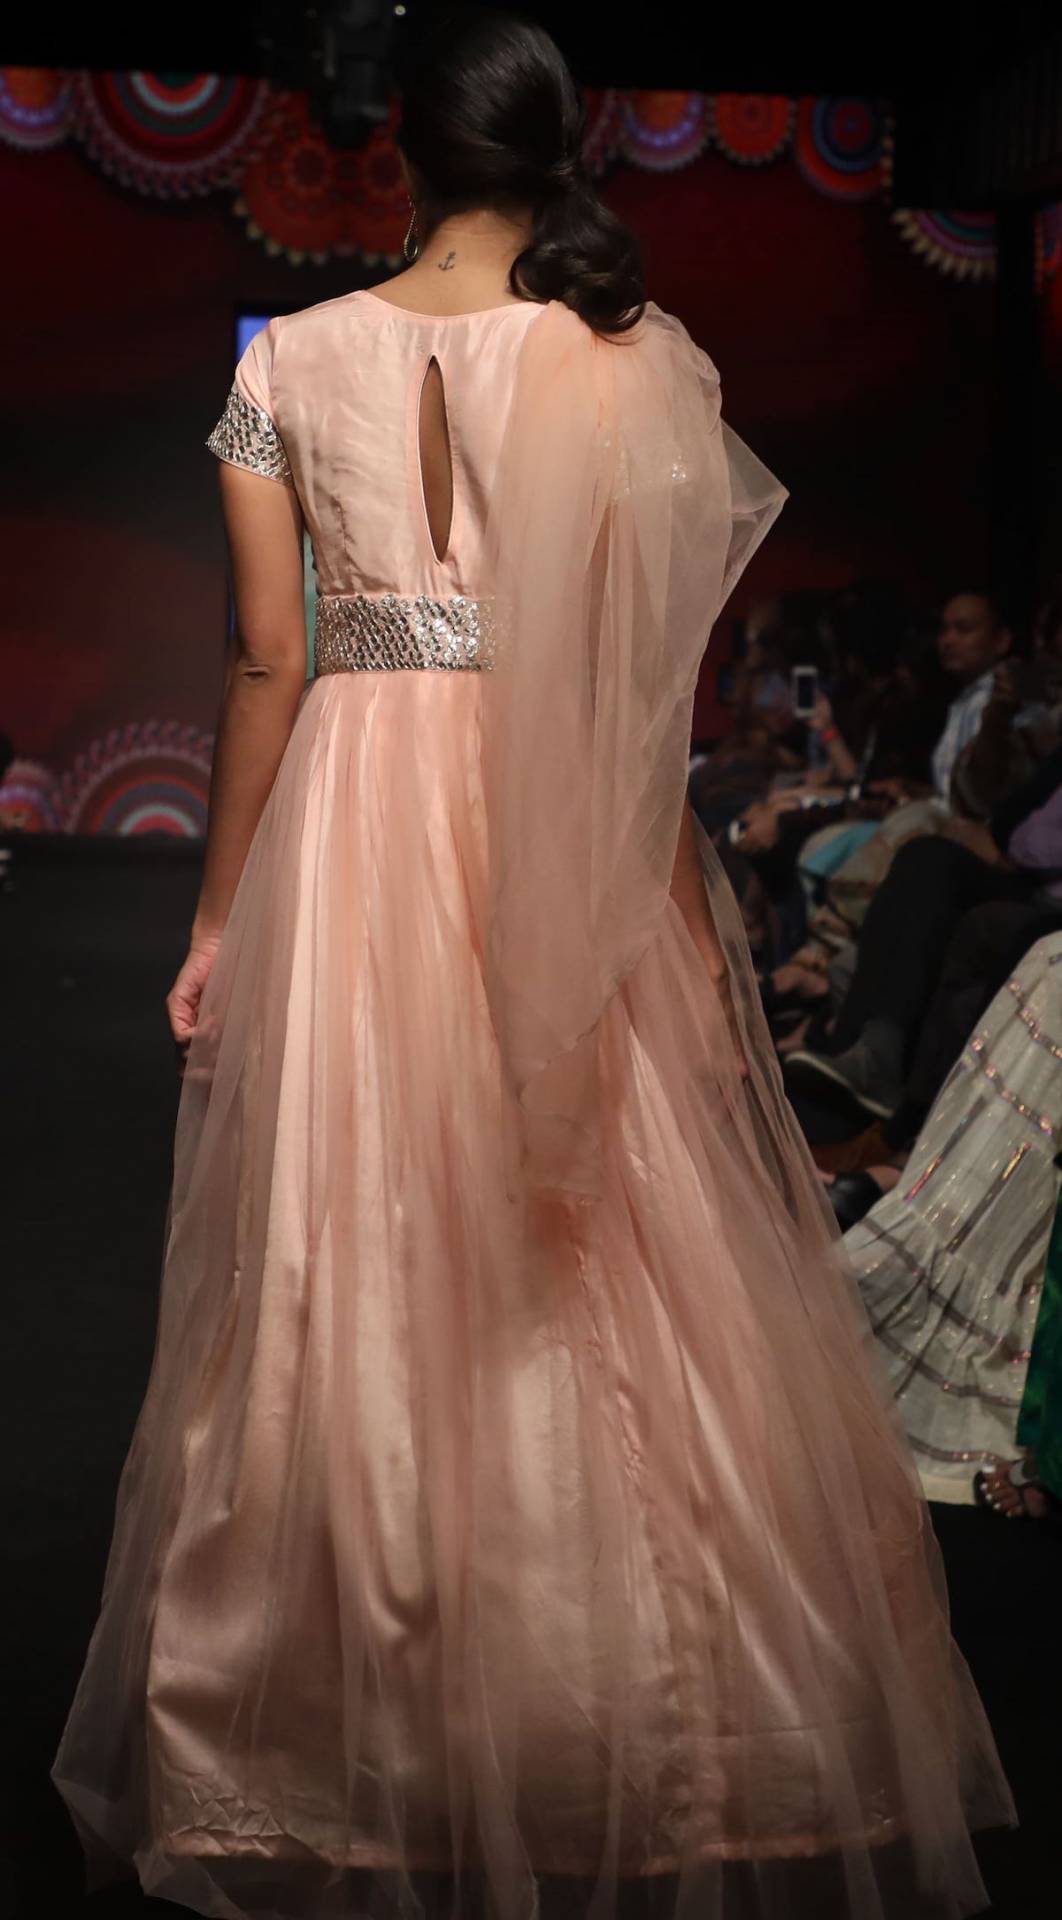 Mayur Jaipuri Vol-1 Cotton Designer Dress Material: Textilecatalog